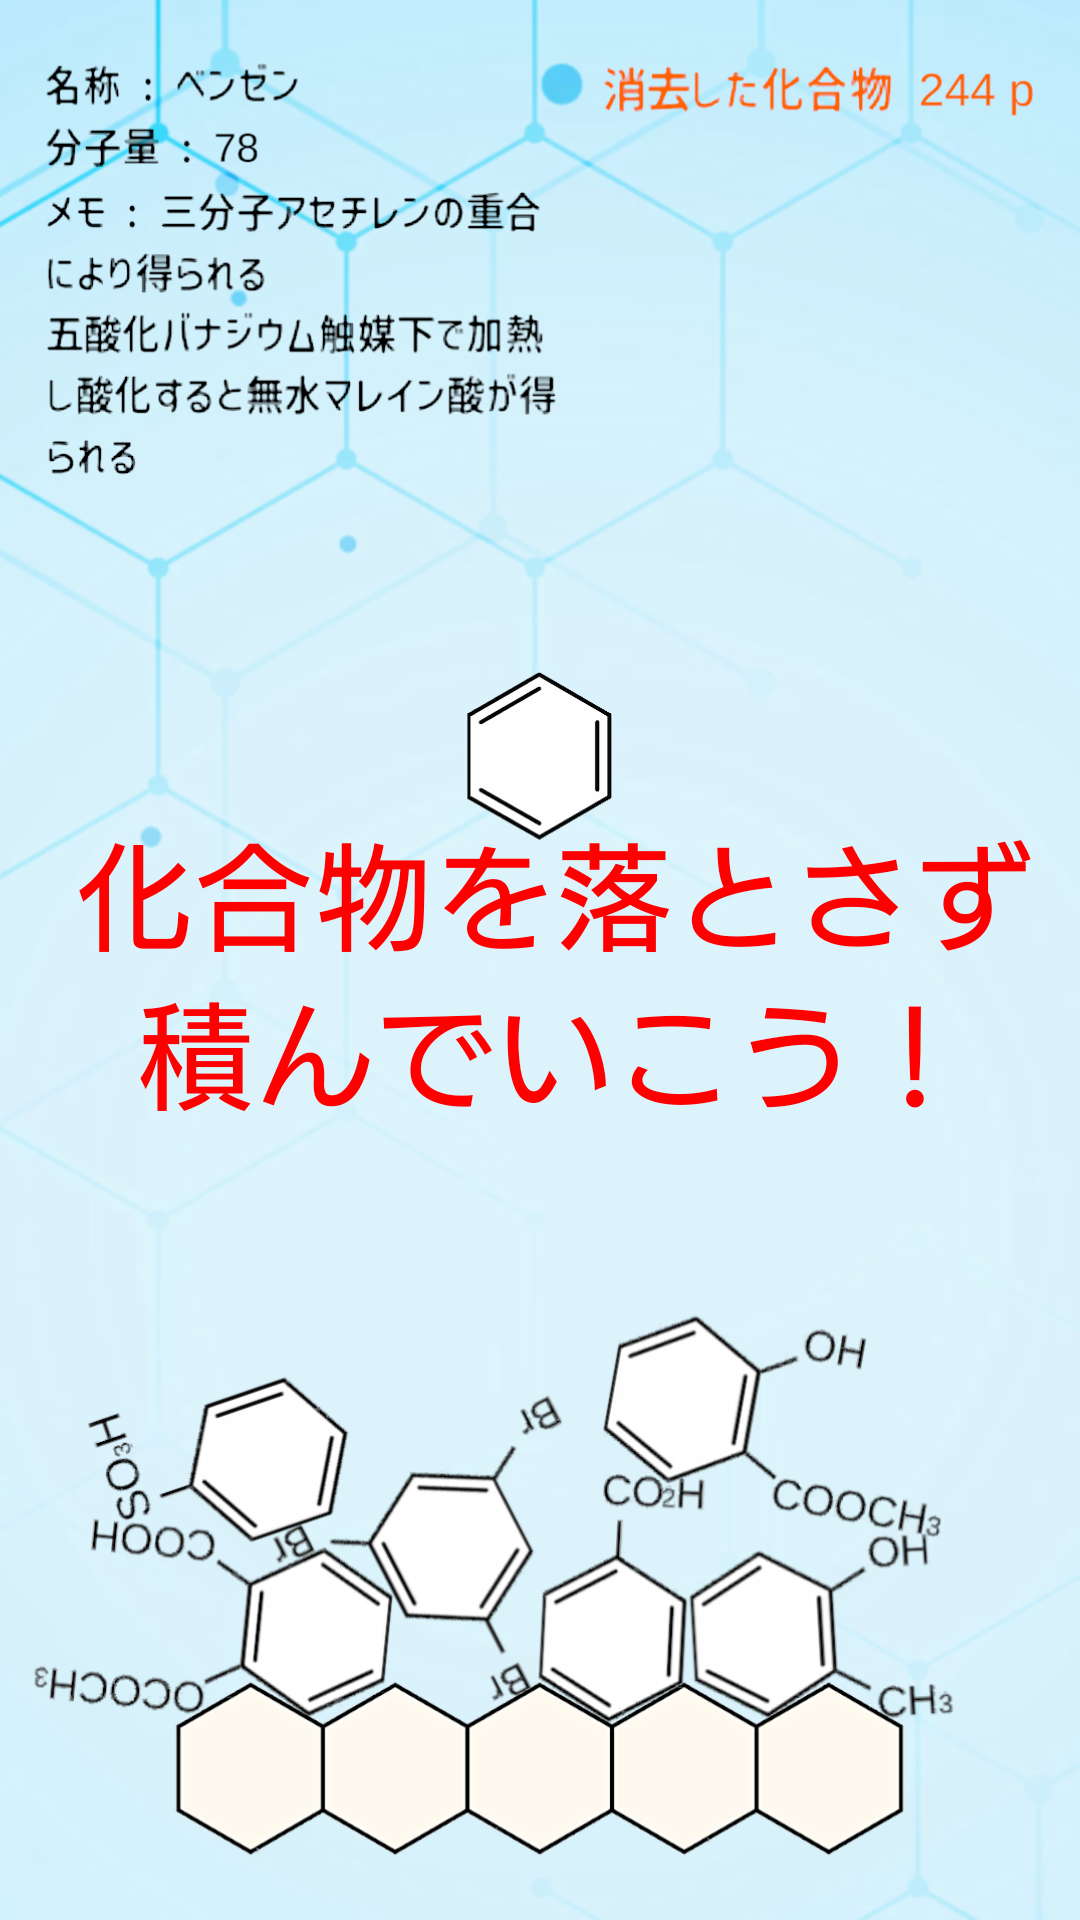 Screenshot 1 of Organic Chemistry Crush សិក្សាគីមីសរីរាង្គ (សមាសធាតុក្លិន) ជាមួយហ្គេម 1.6